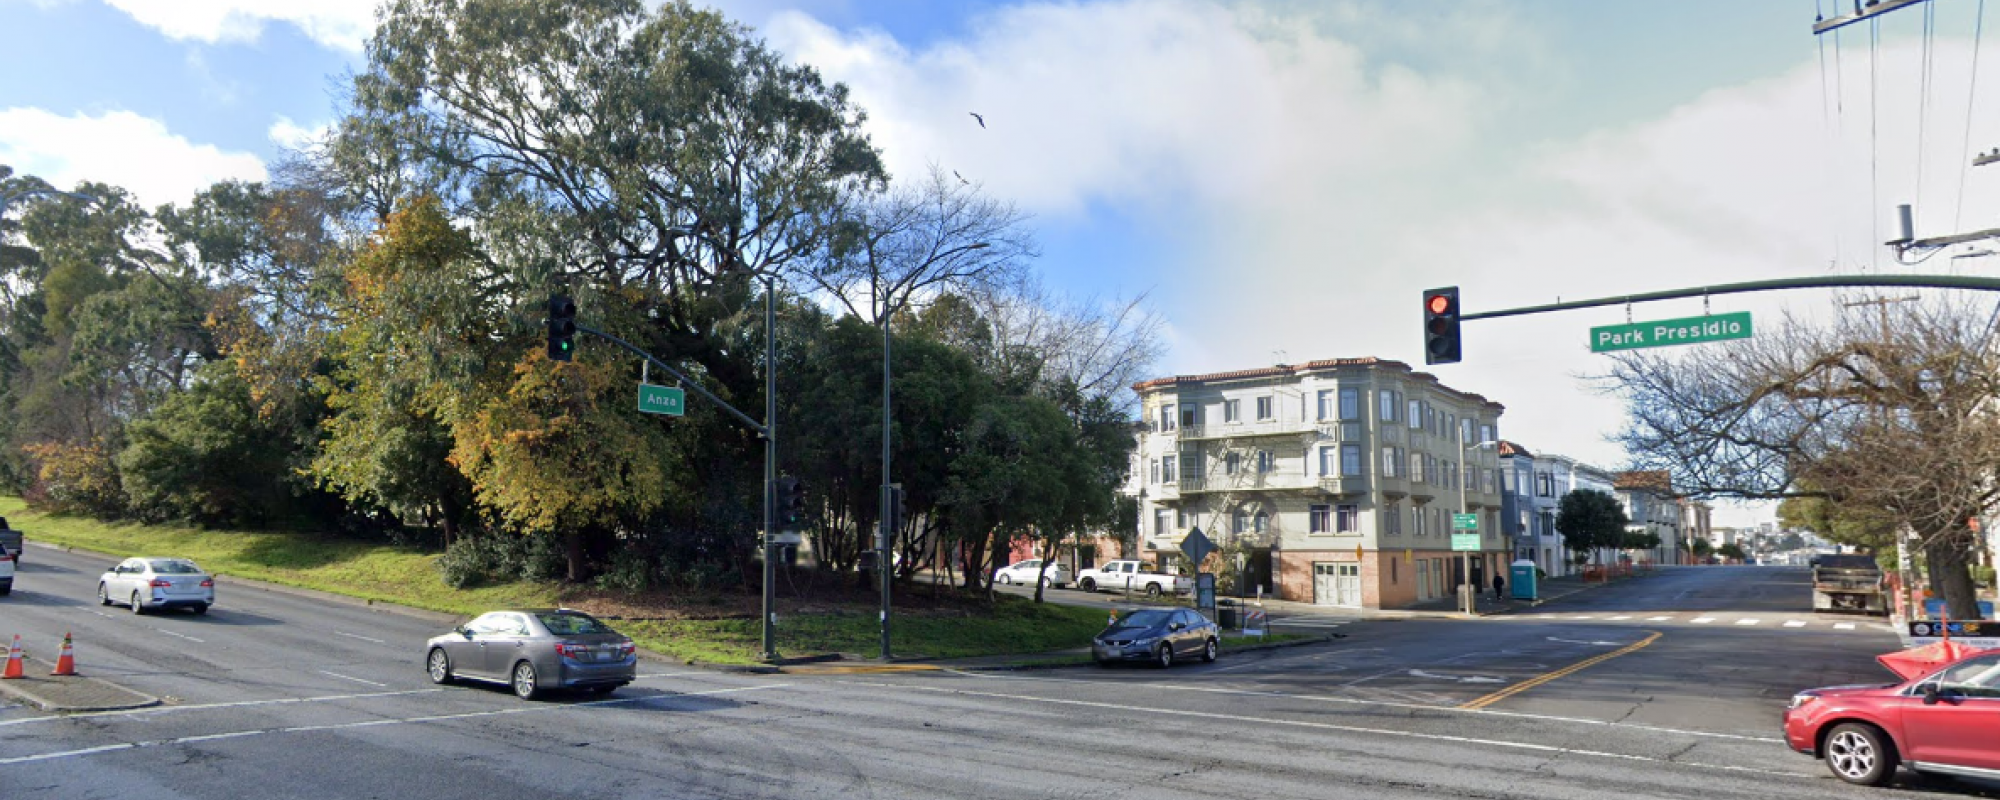 Anza Street and Park Presidio Boulevard